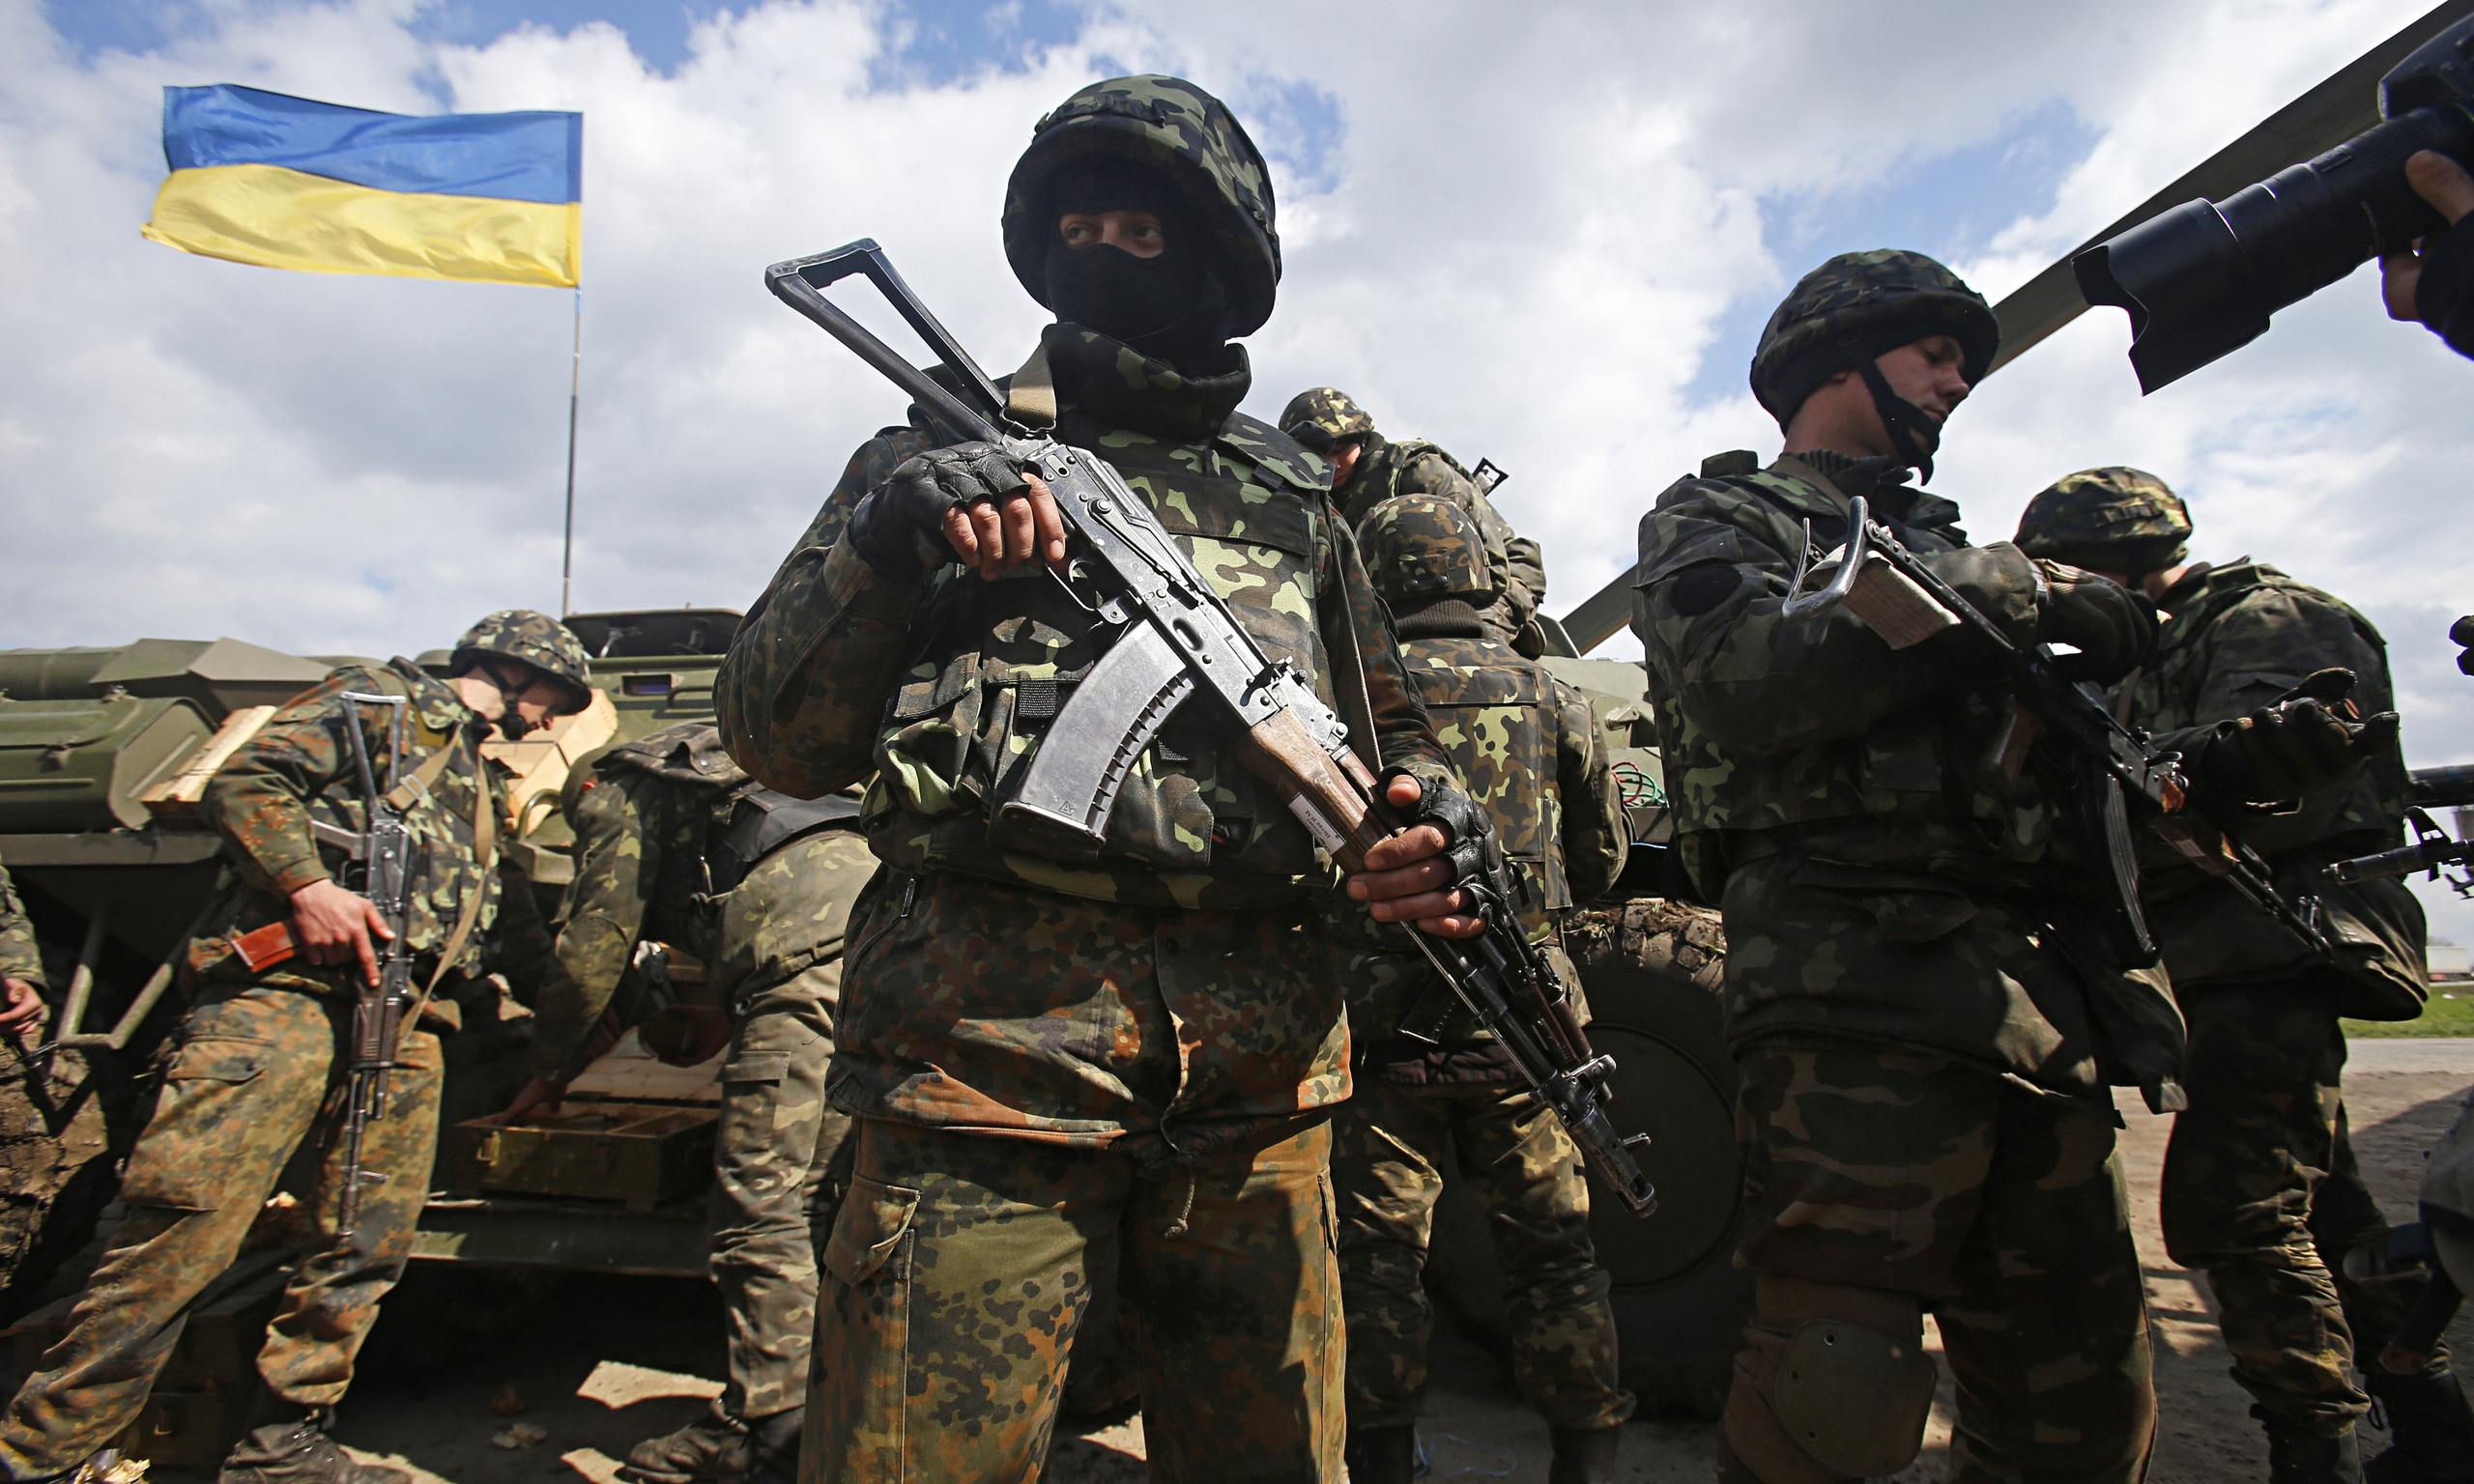 Turn the Ukrainian army into a Swiss one?